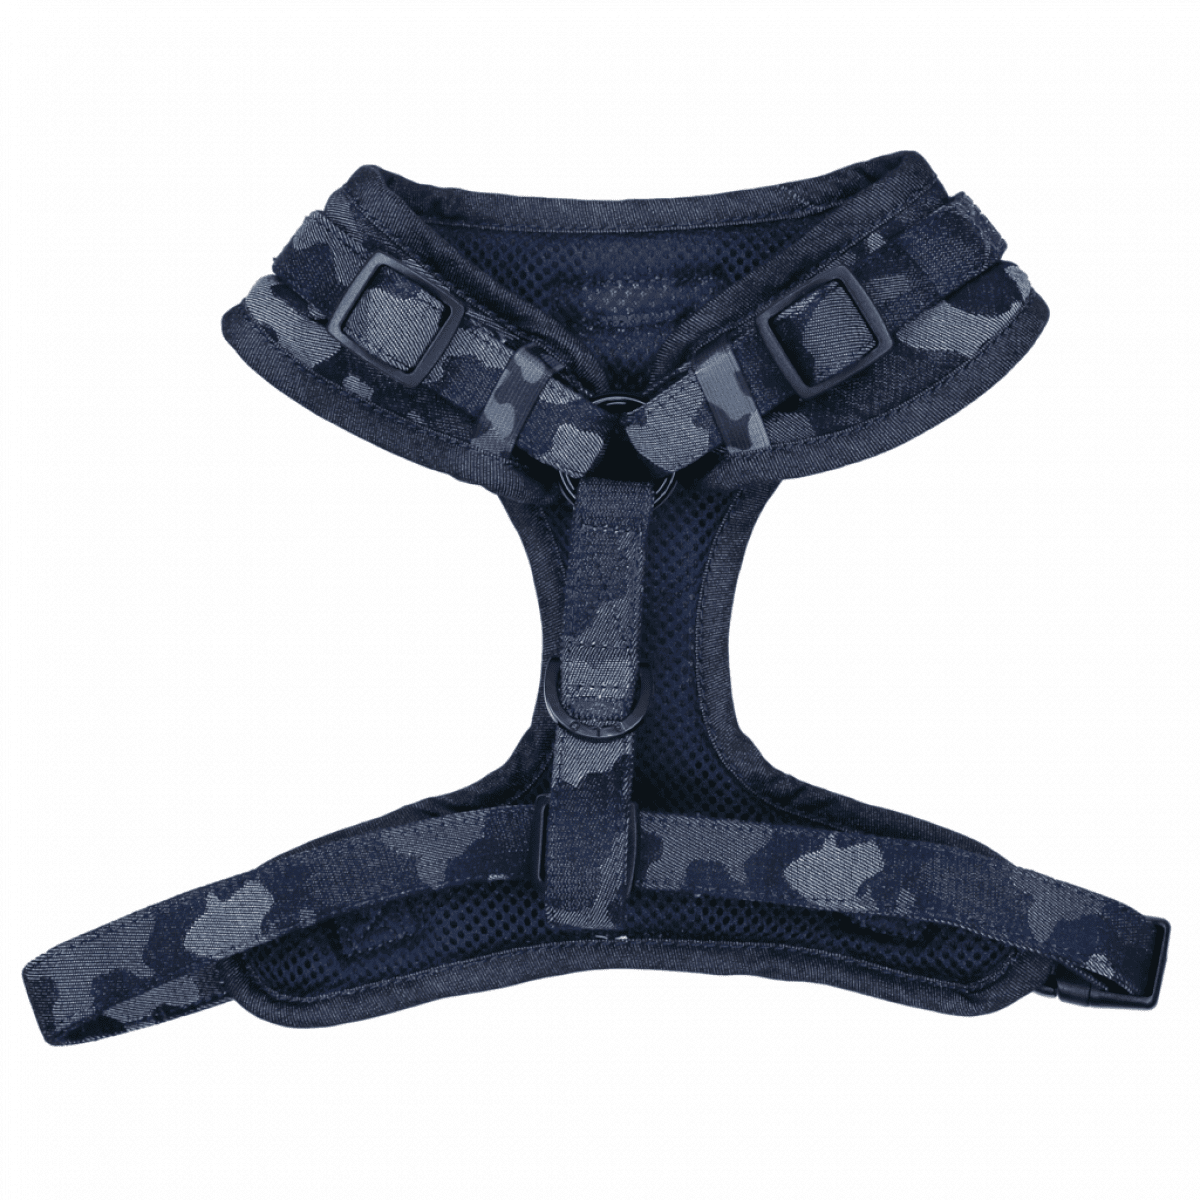 BLD Adjustable Harness - Denim Camo Main Image